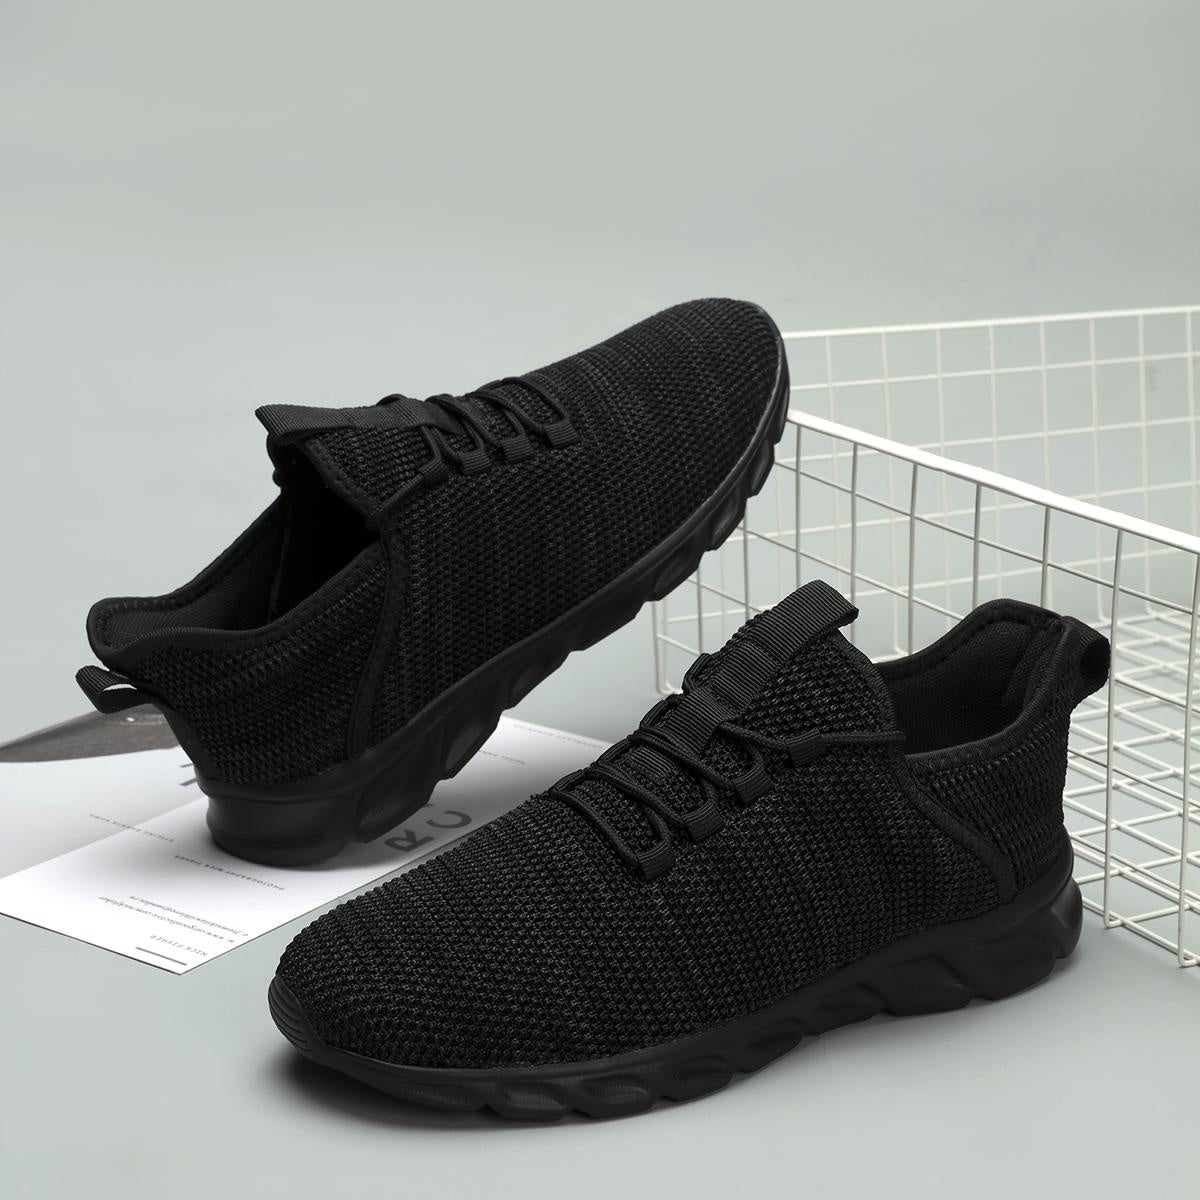 Damyuan Sneakers for Man Lightweight Running Comfort Casual Walking Fashion Sneaker